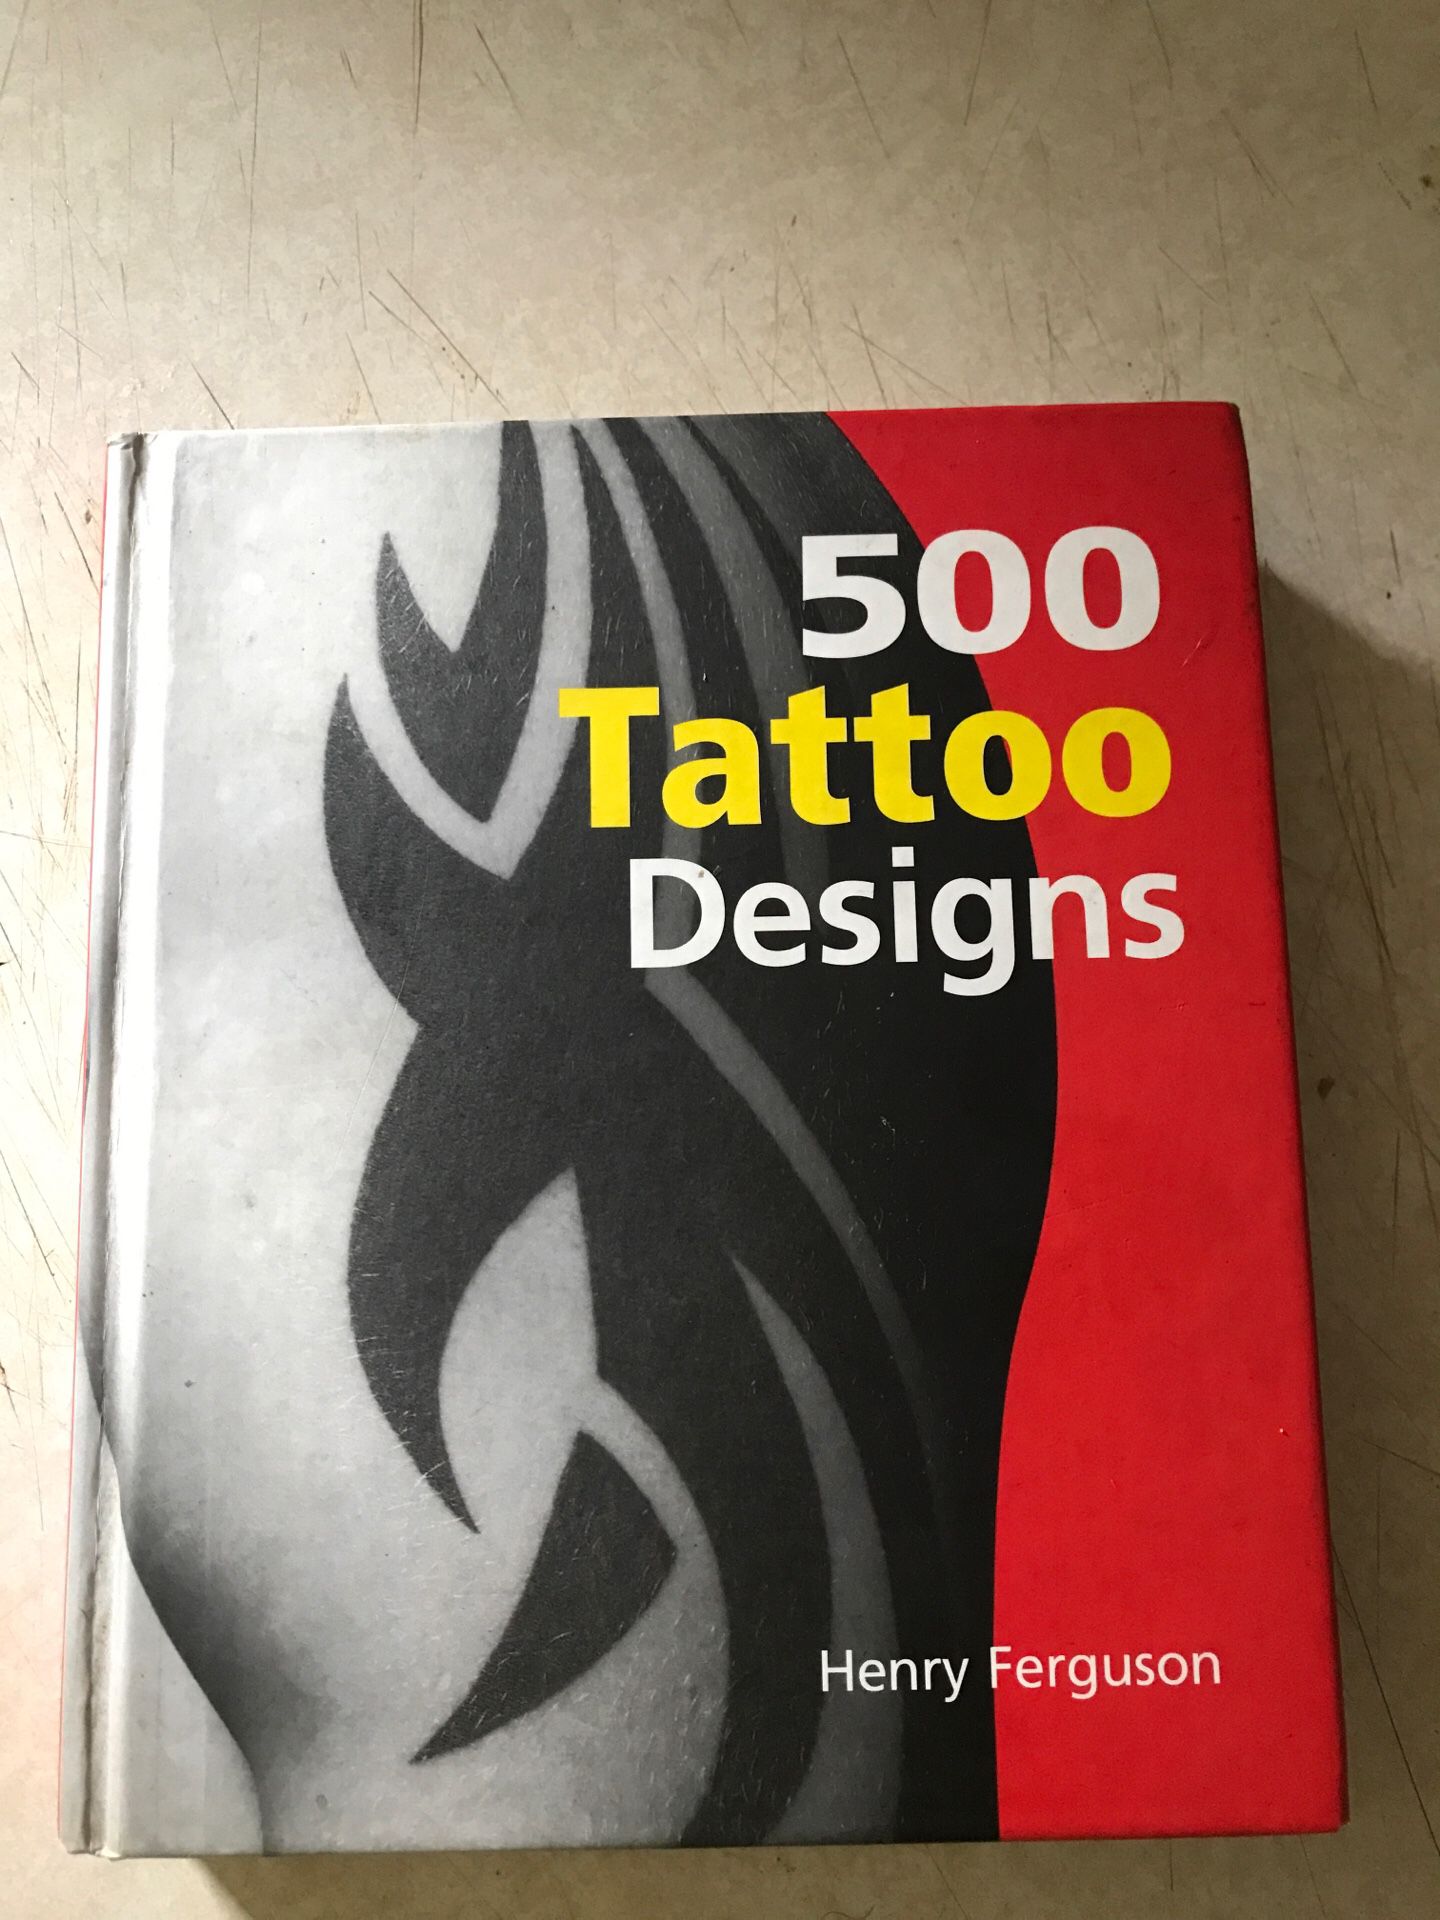 Tattoo design idea book